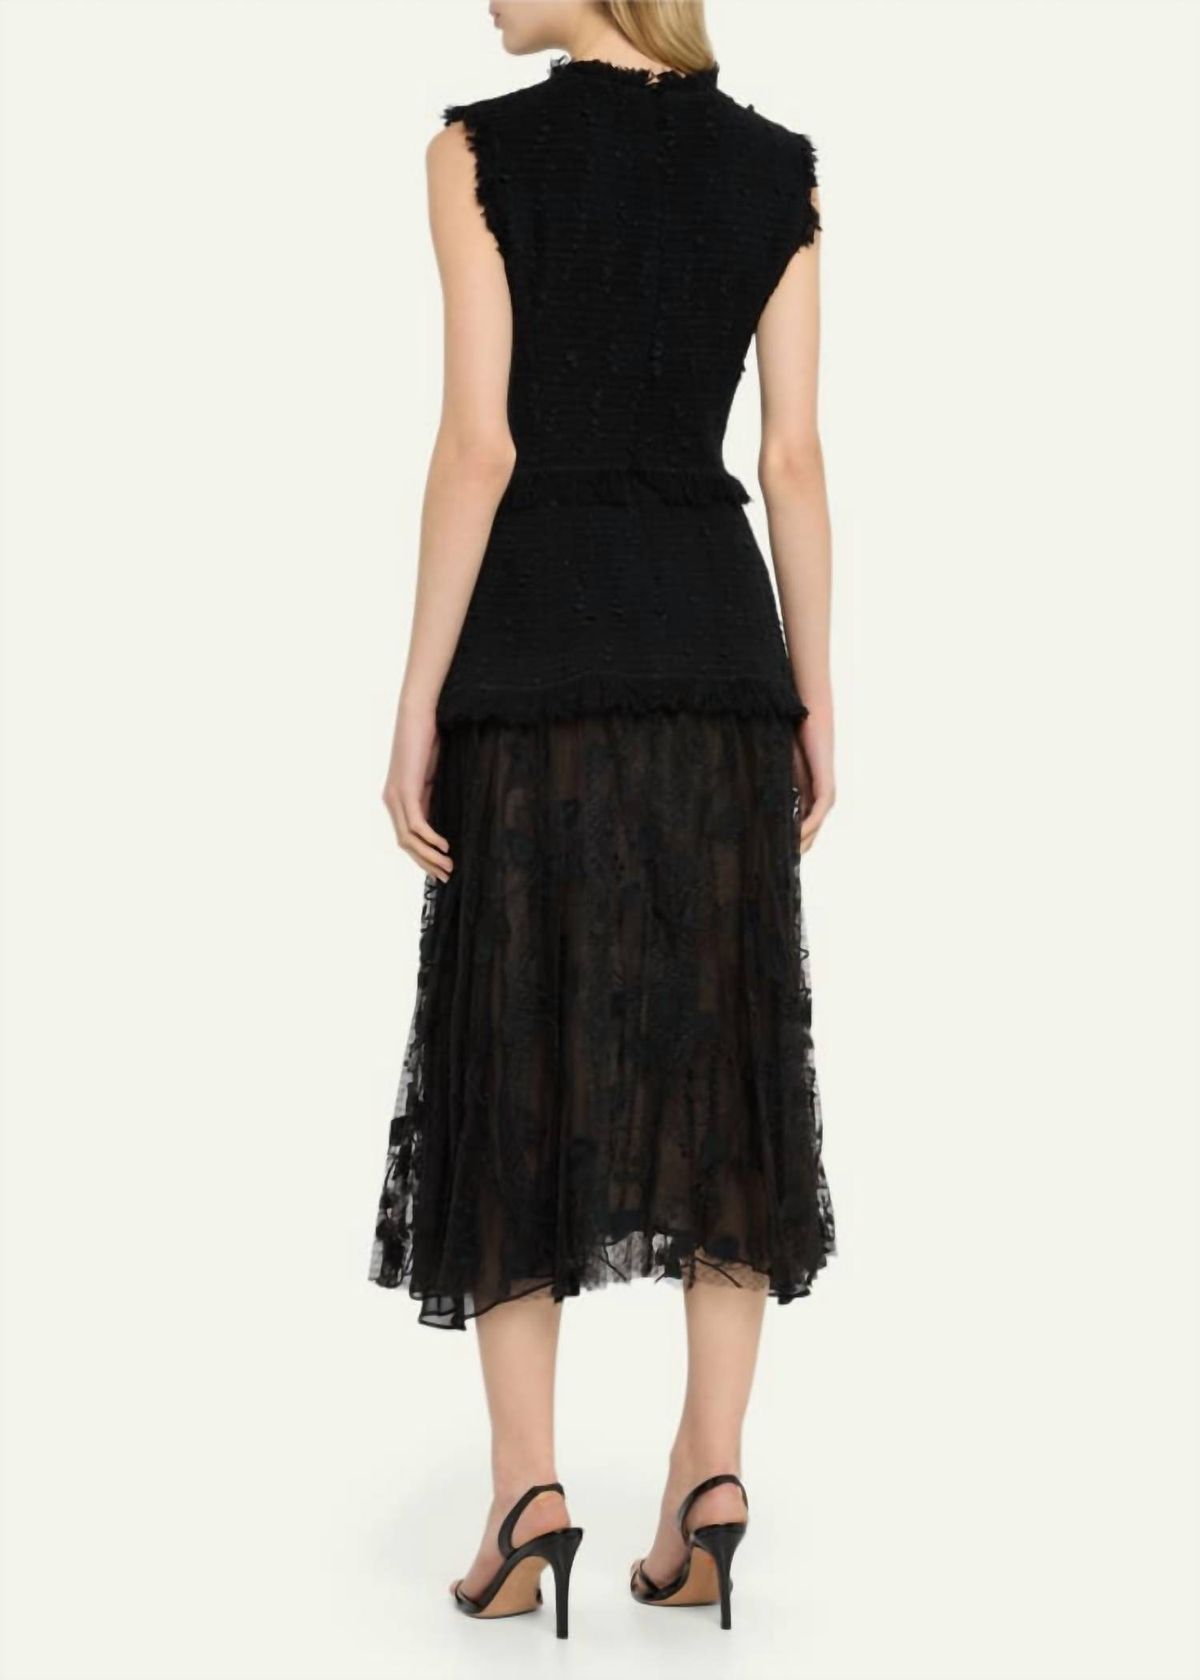 Style 1-4093487207-3710 Oscar de la Renta Size 8 Lace Black Cocktail Dress on Queenly